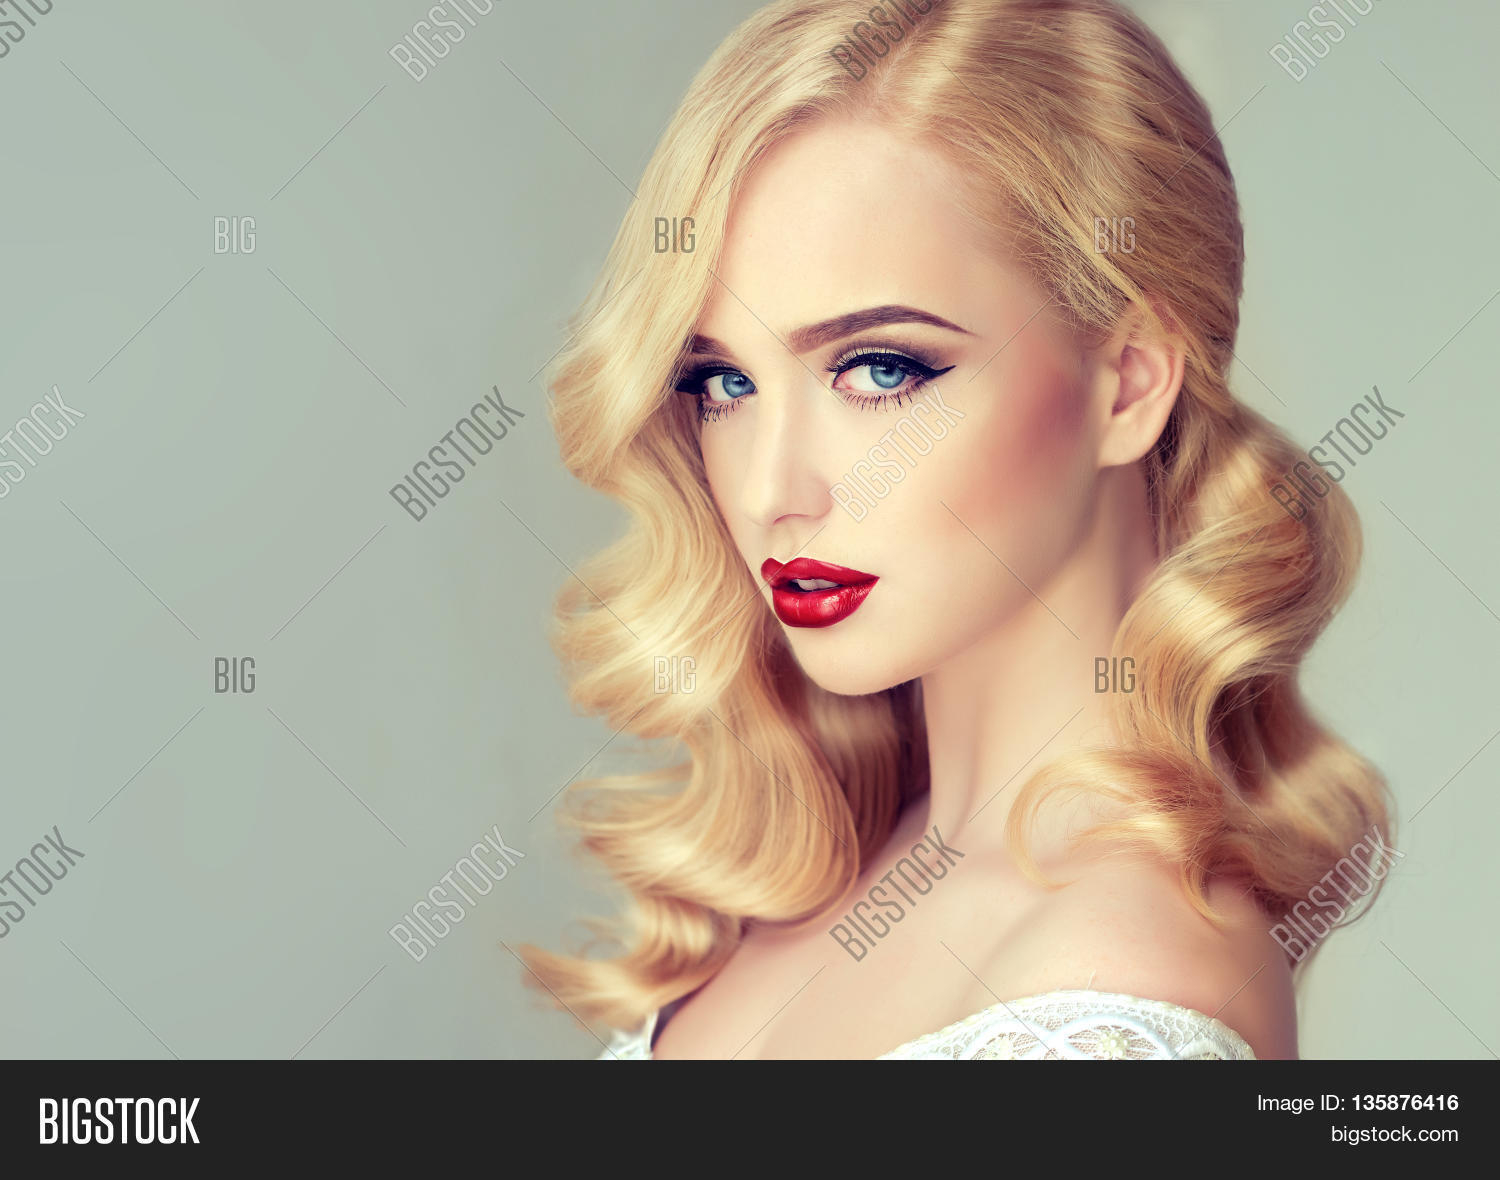 Makeup For Blue Eyes Blonde Hair Beautiful Blonde Girl Image Photo Free Trial Bigstock